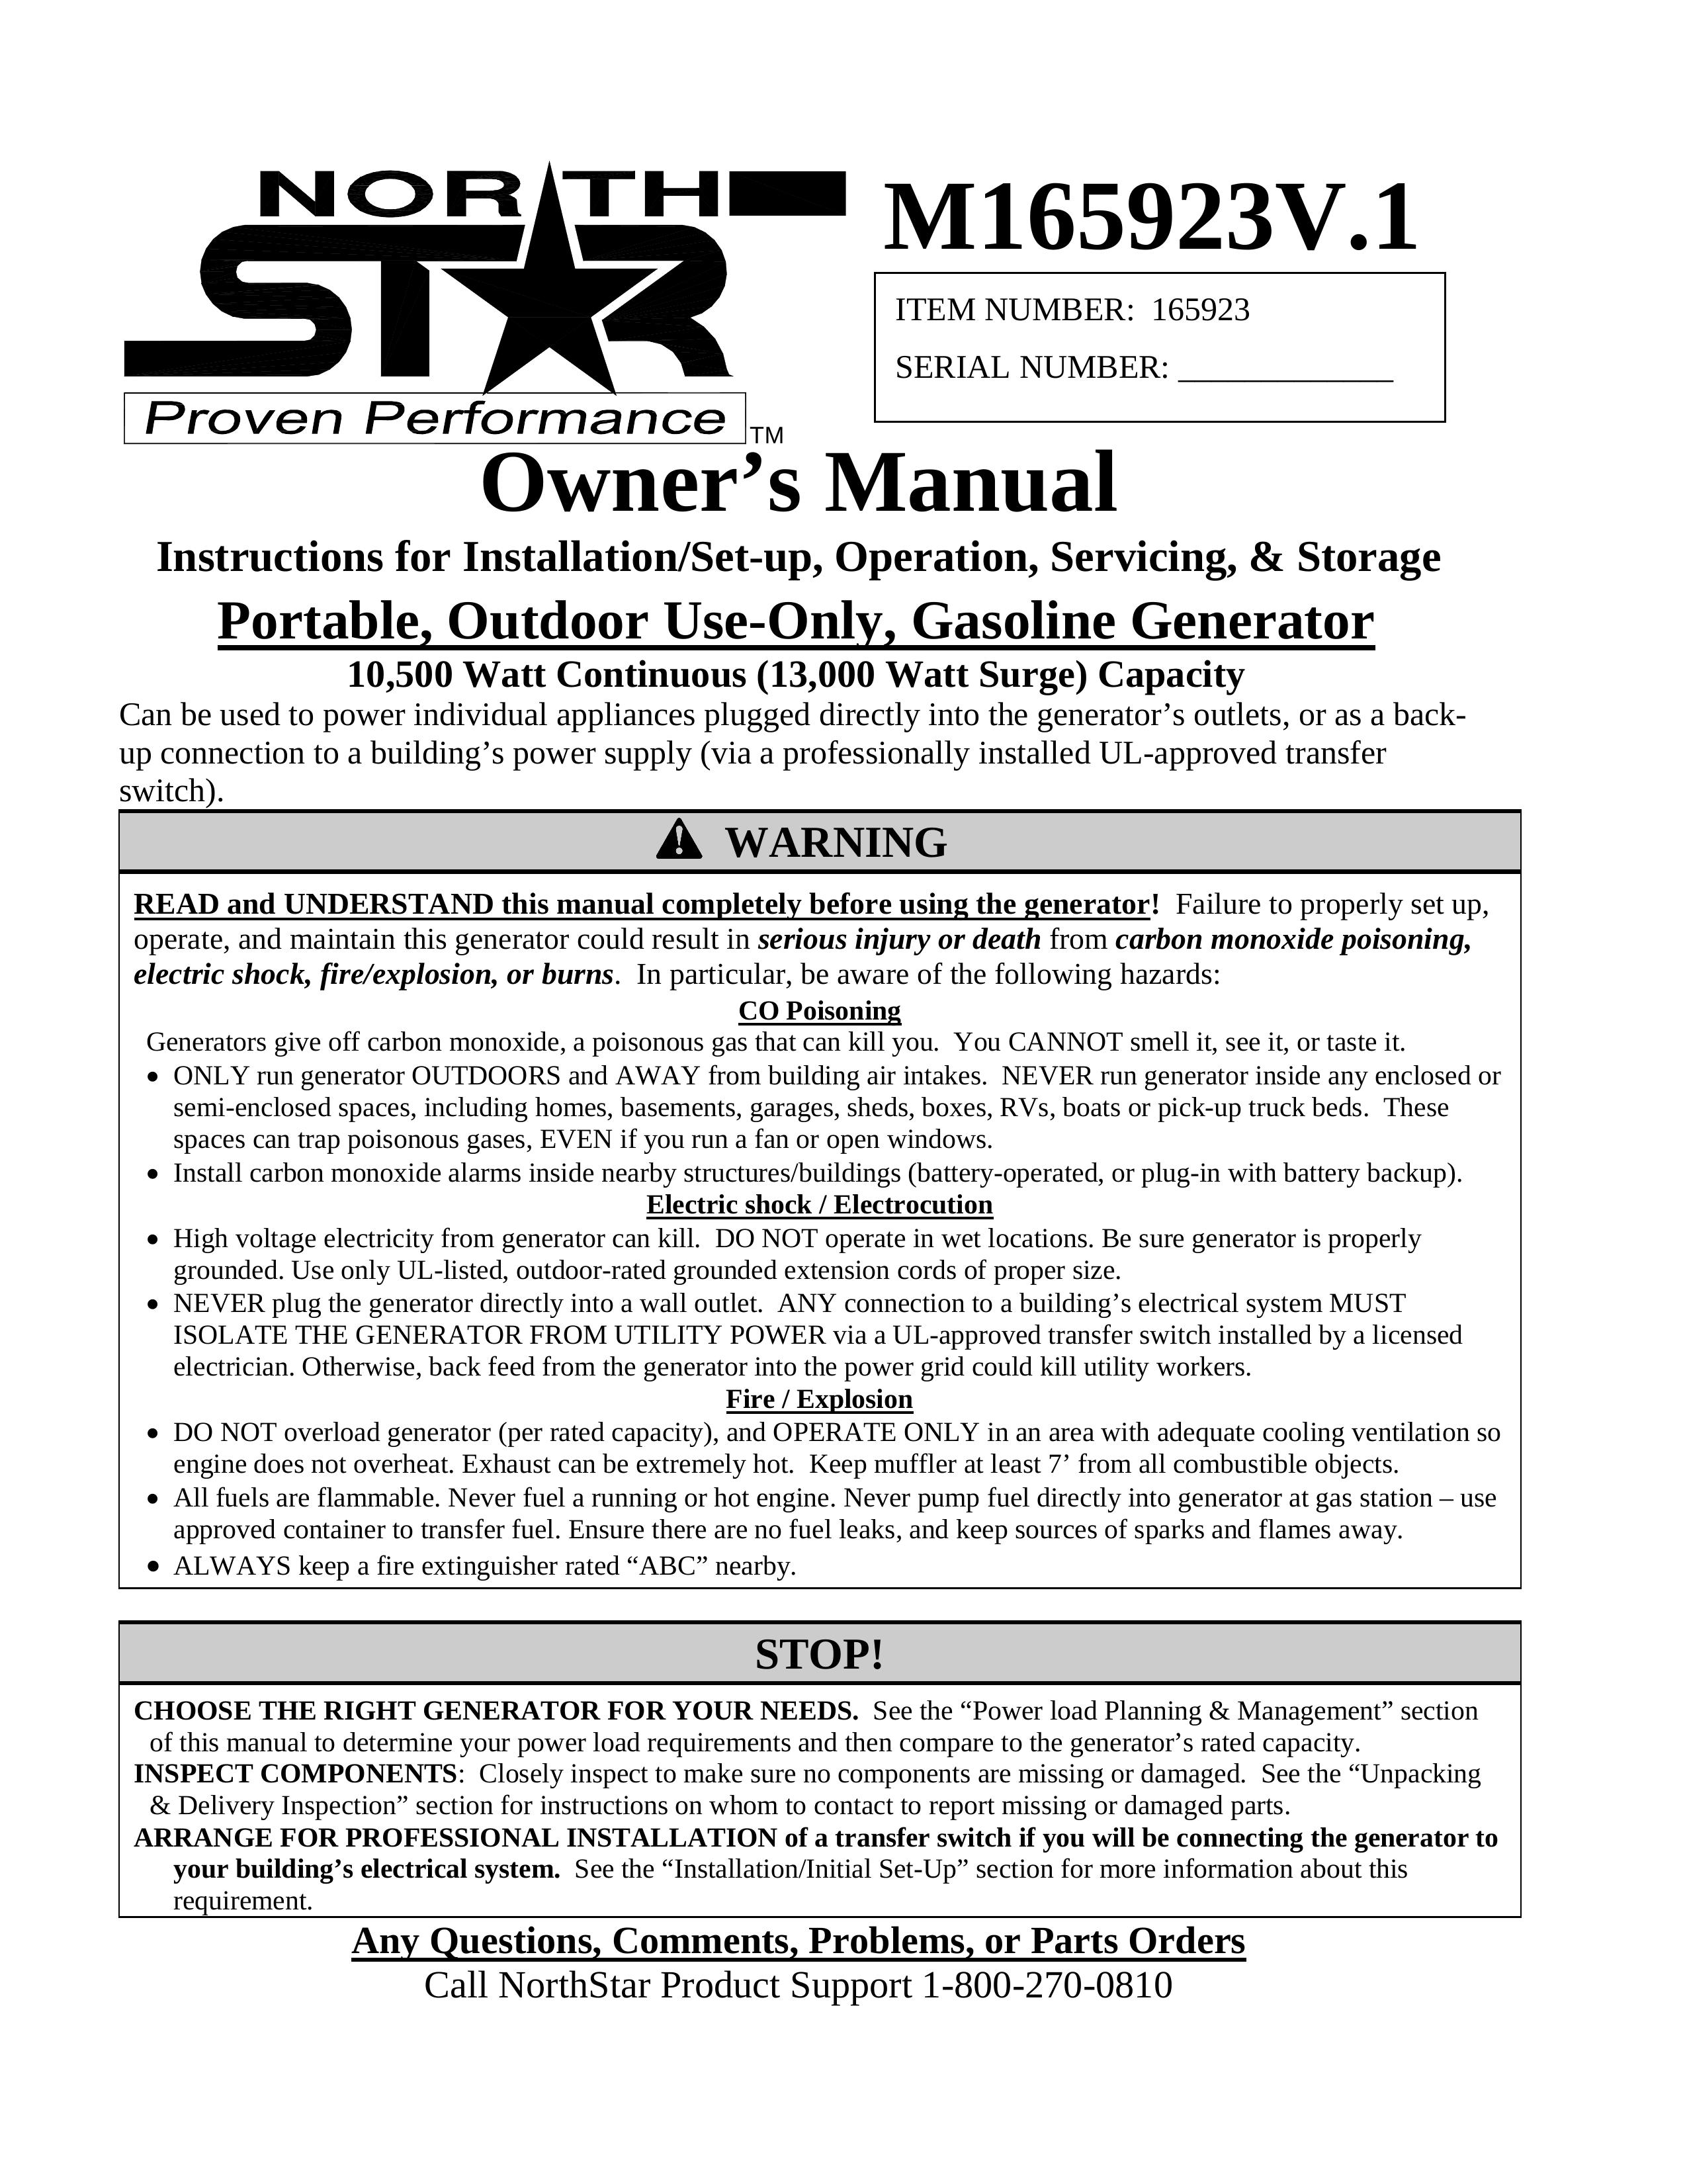 North Star M165923V.1 Portable Generator User Manual